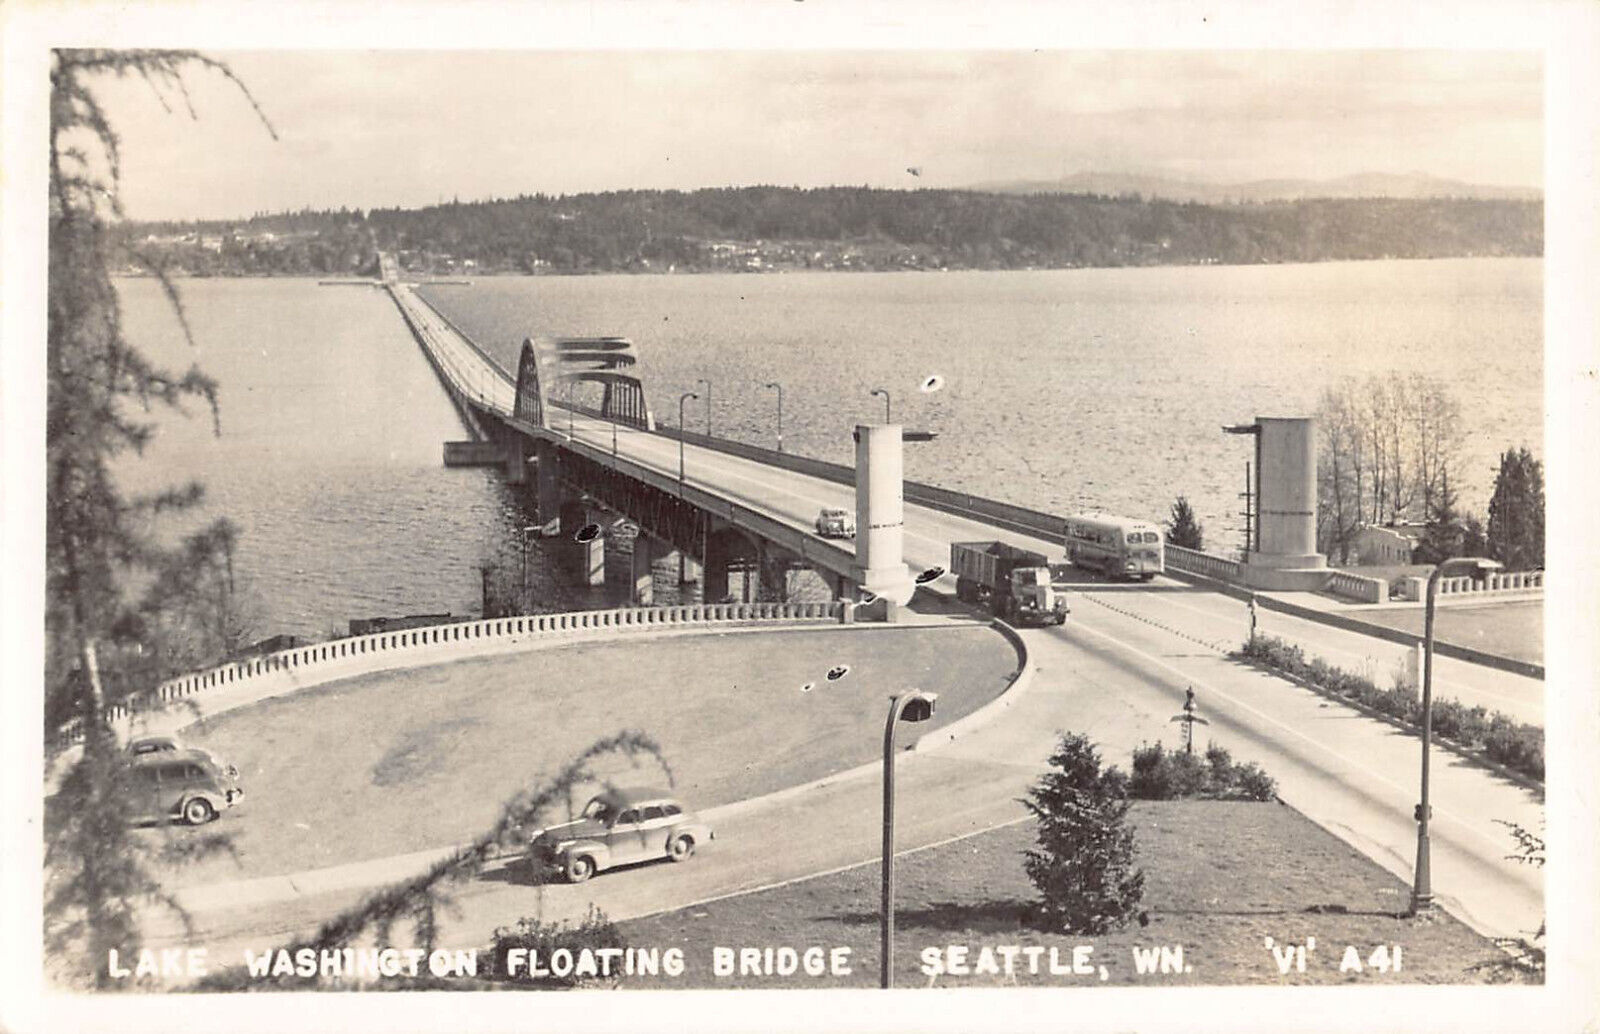 Seattle Washington Lake Washington Floating Bridge postcard real photo original